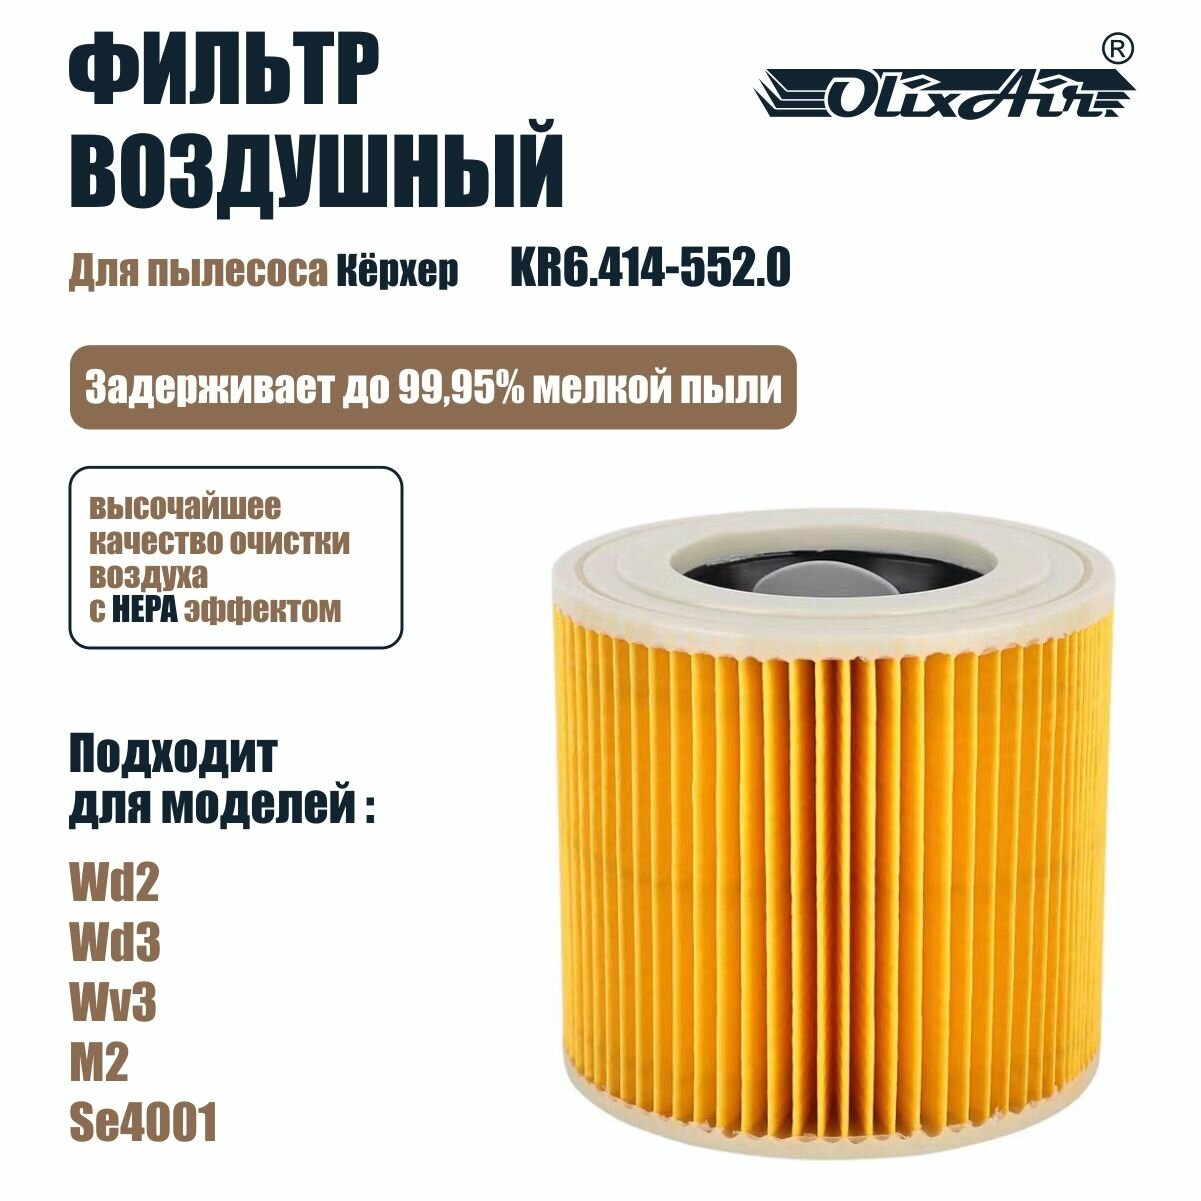 Фильтр для пылеcосов Кёрхер MV2 MV3 WD3 WD2 D2250 SE/WD. KR6.414-552.0